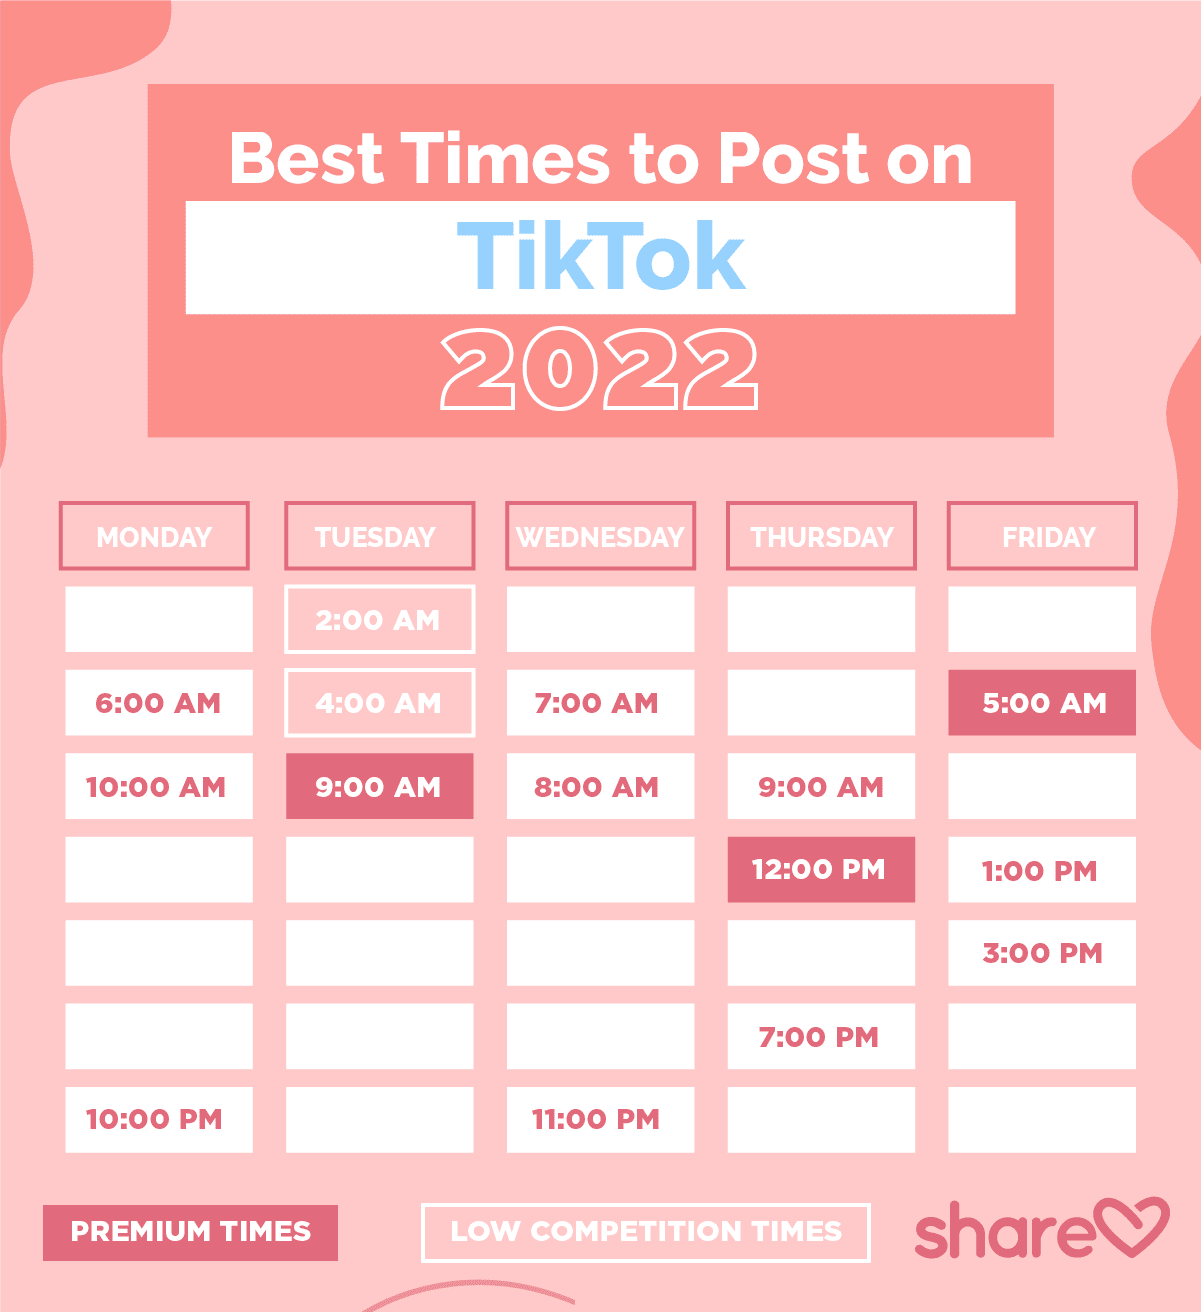 Best times to post on TikTok 2022